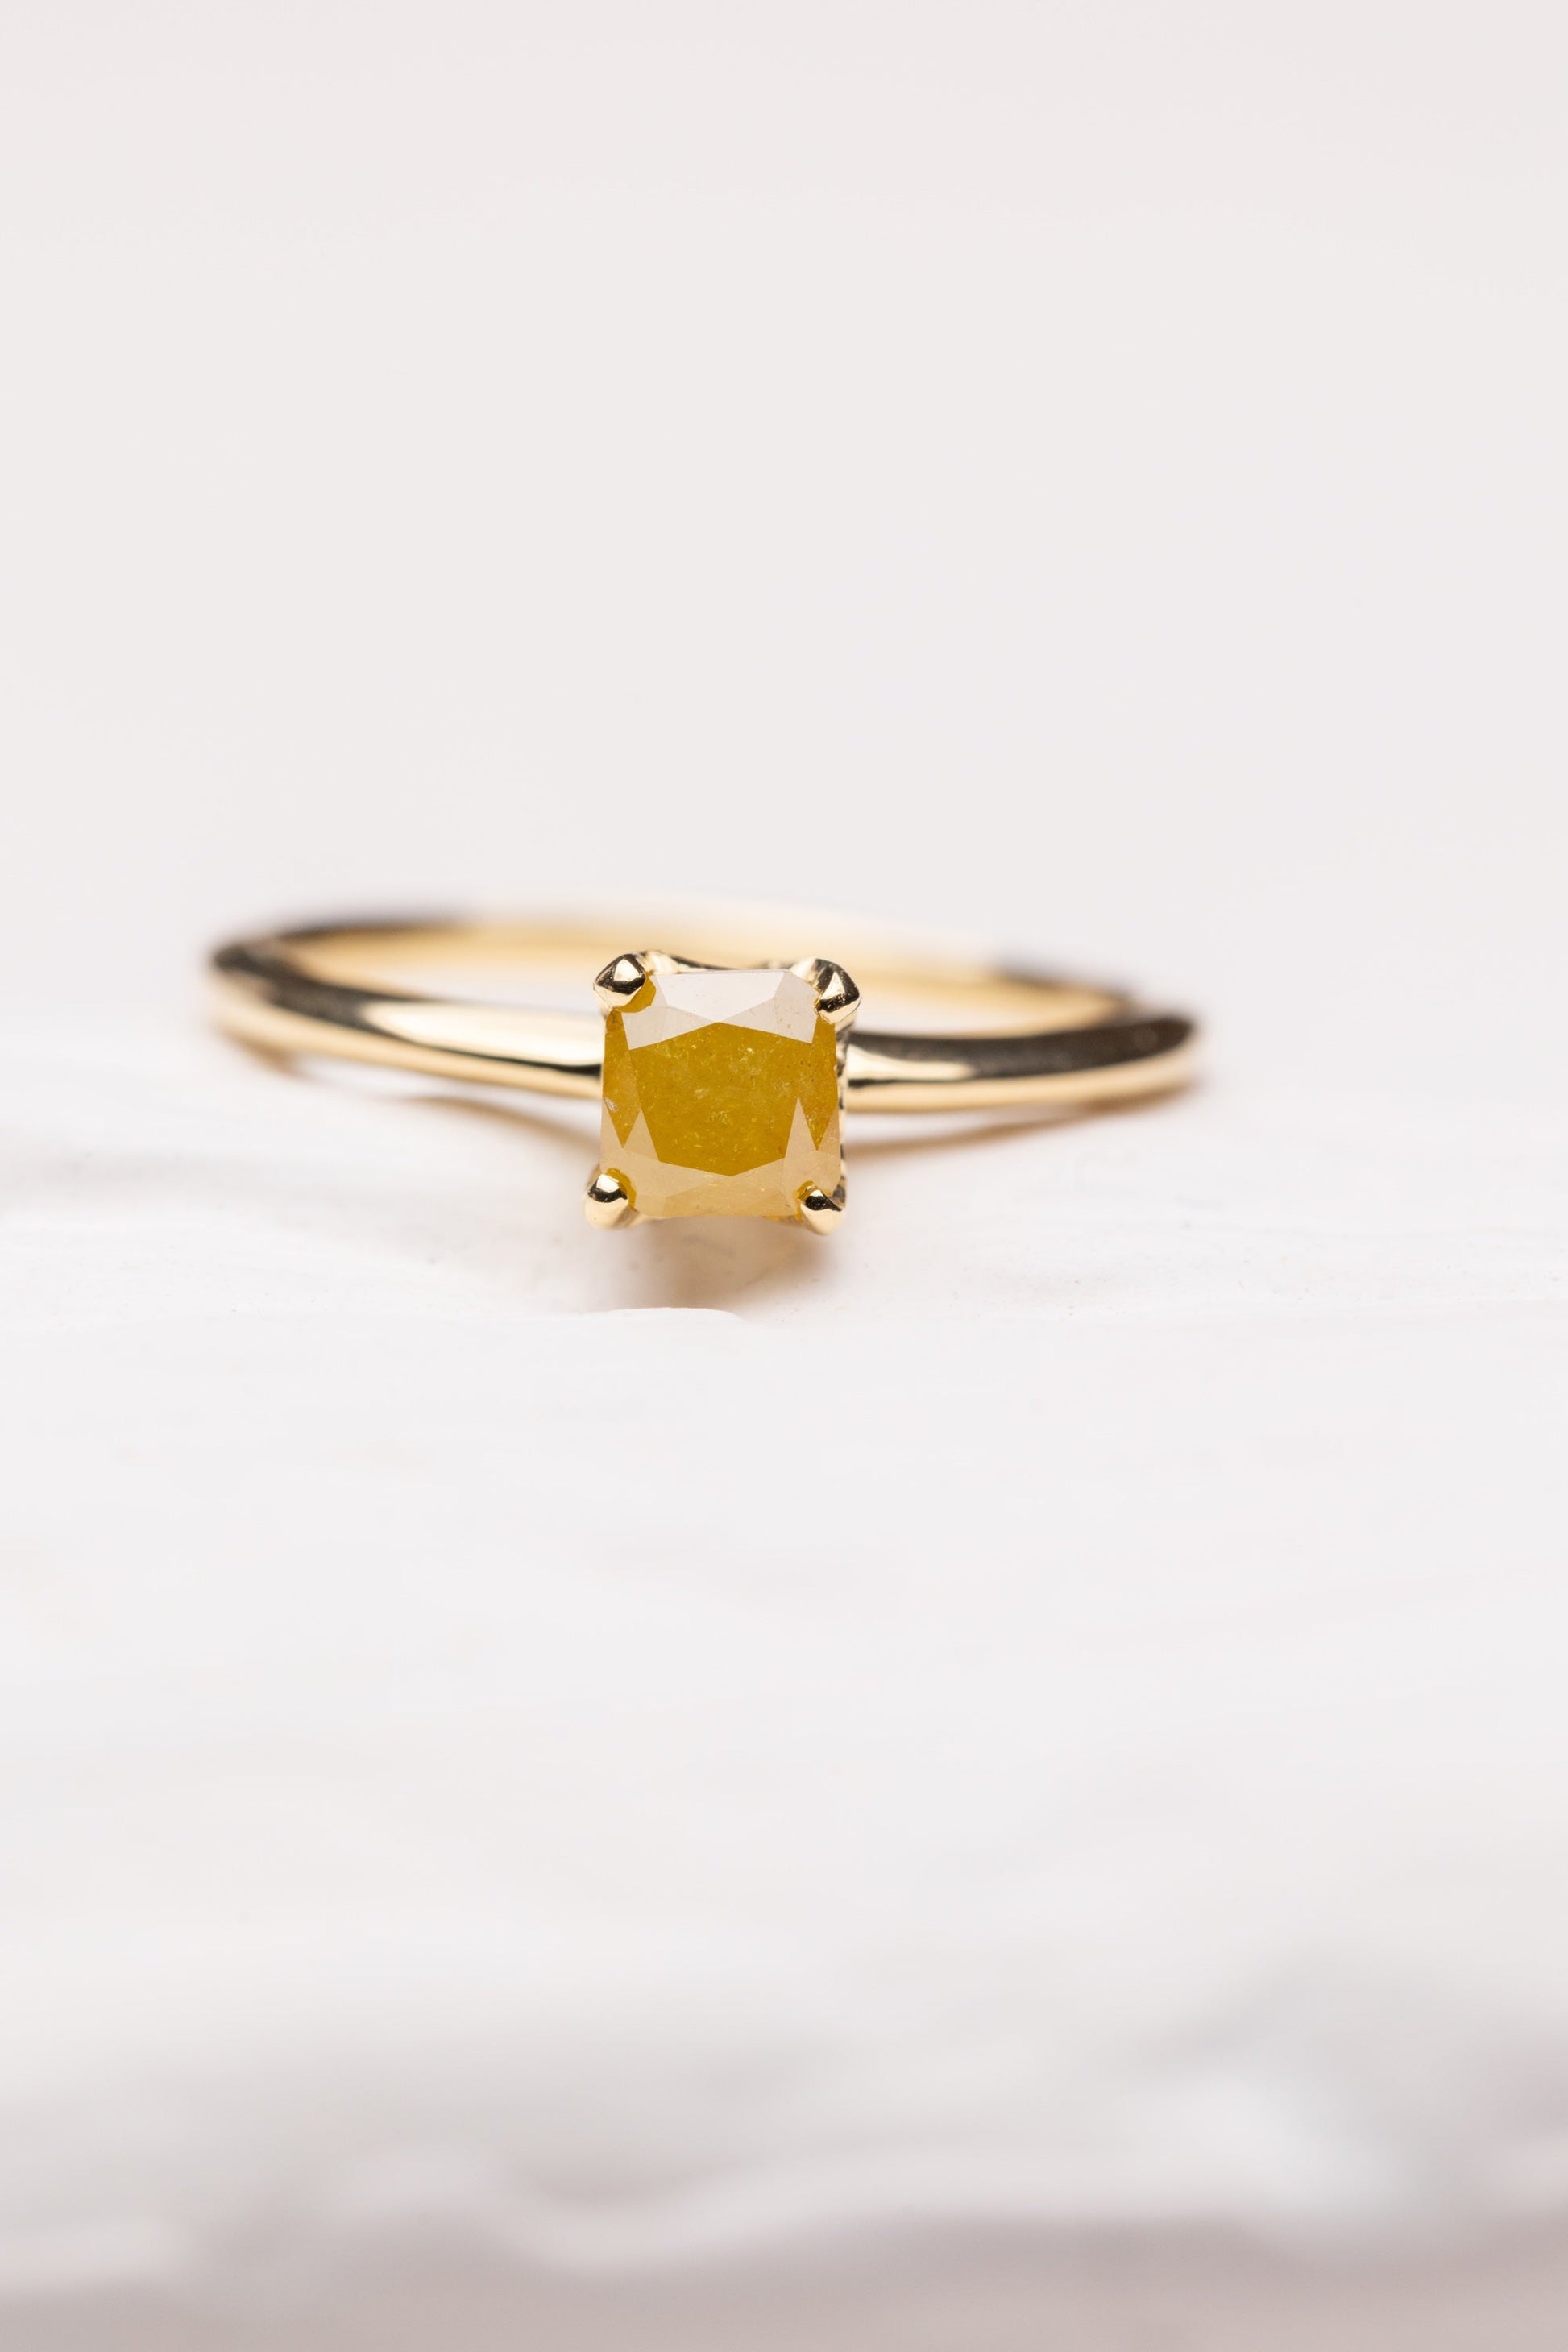 0.83ct Opaque Yellow Diamond, 18KYG, with Prongs